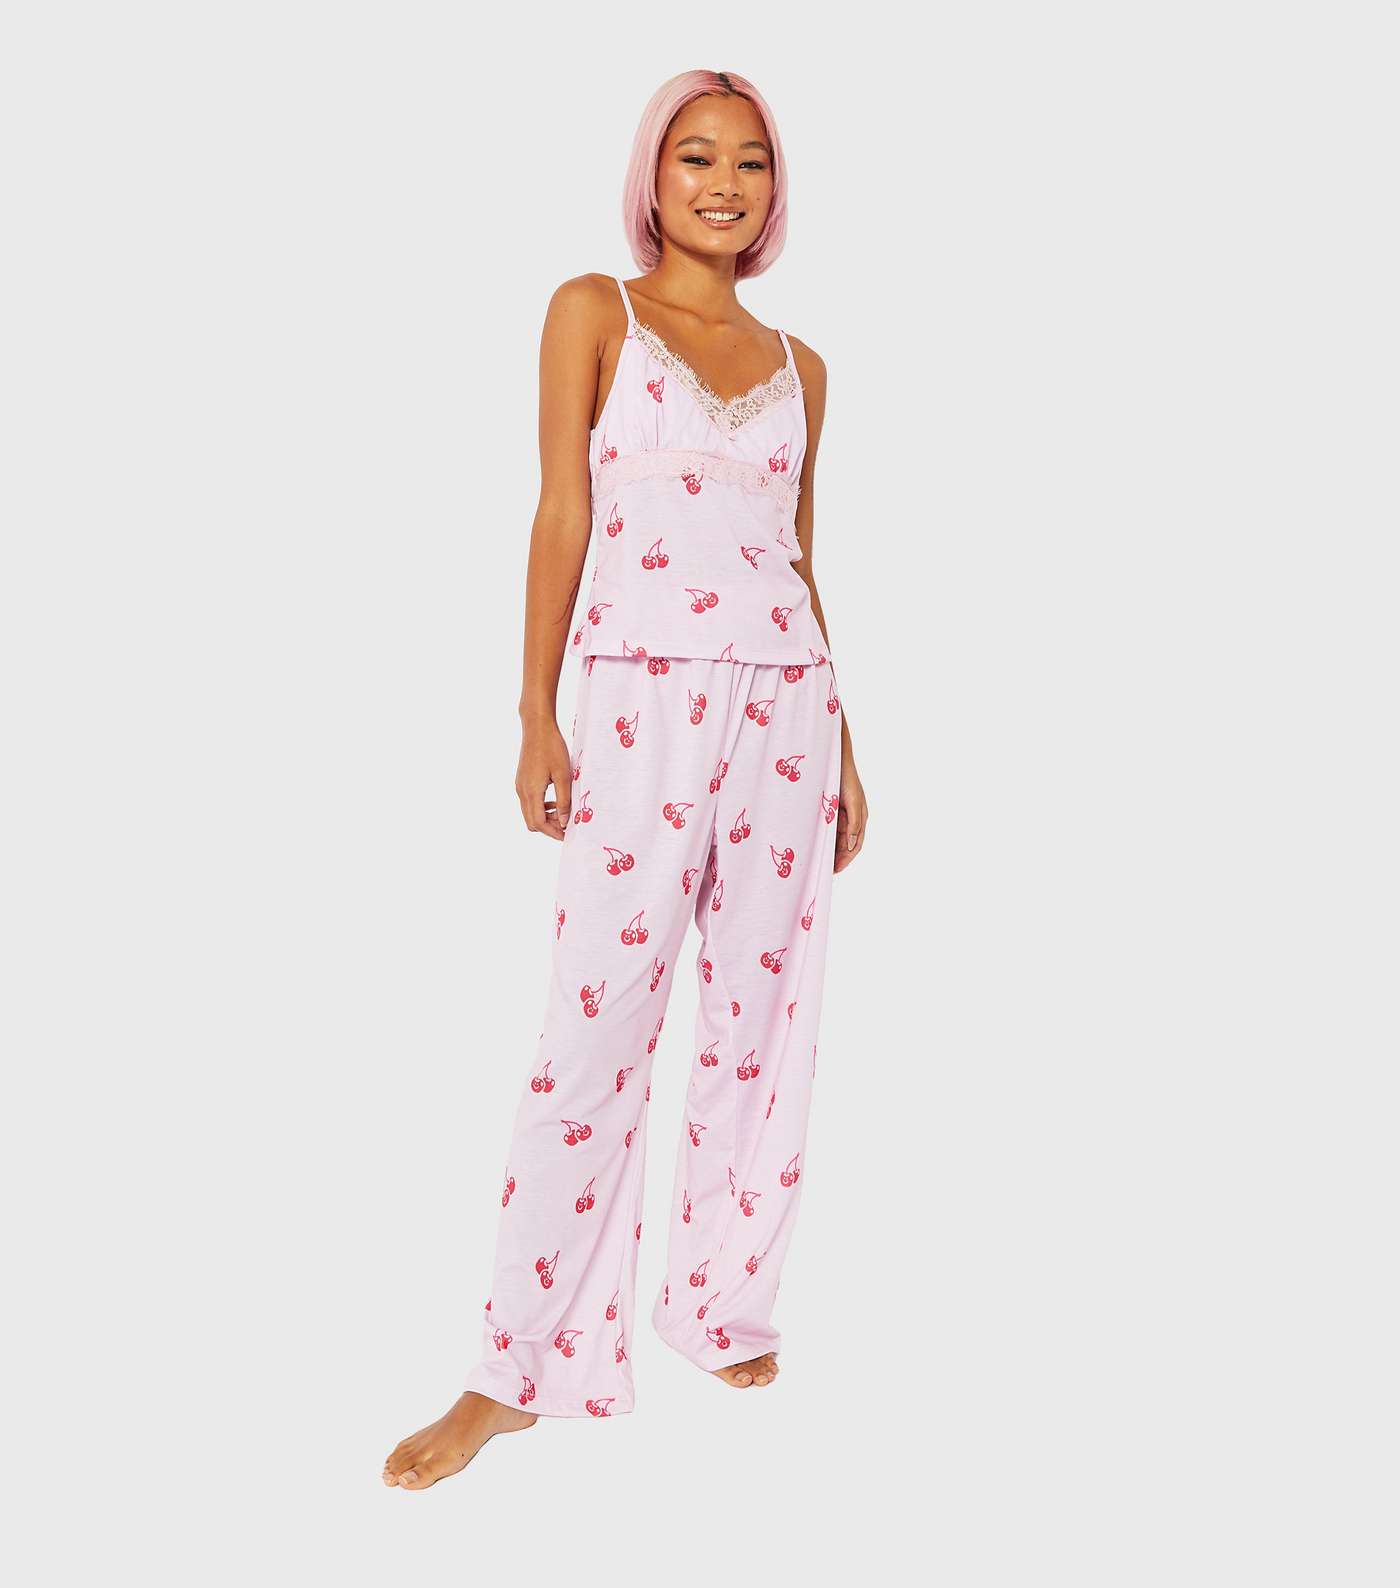 Skinnydip Pink Lace Trim Pyjama Set with Cherry Print Image 2